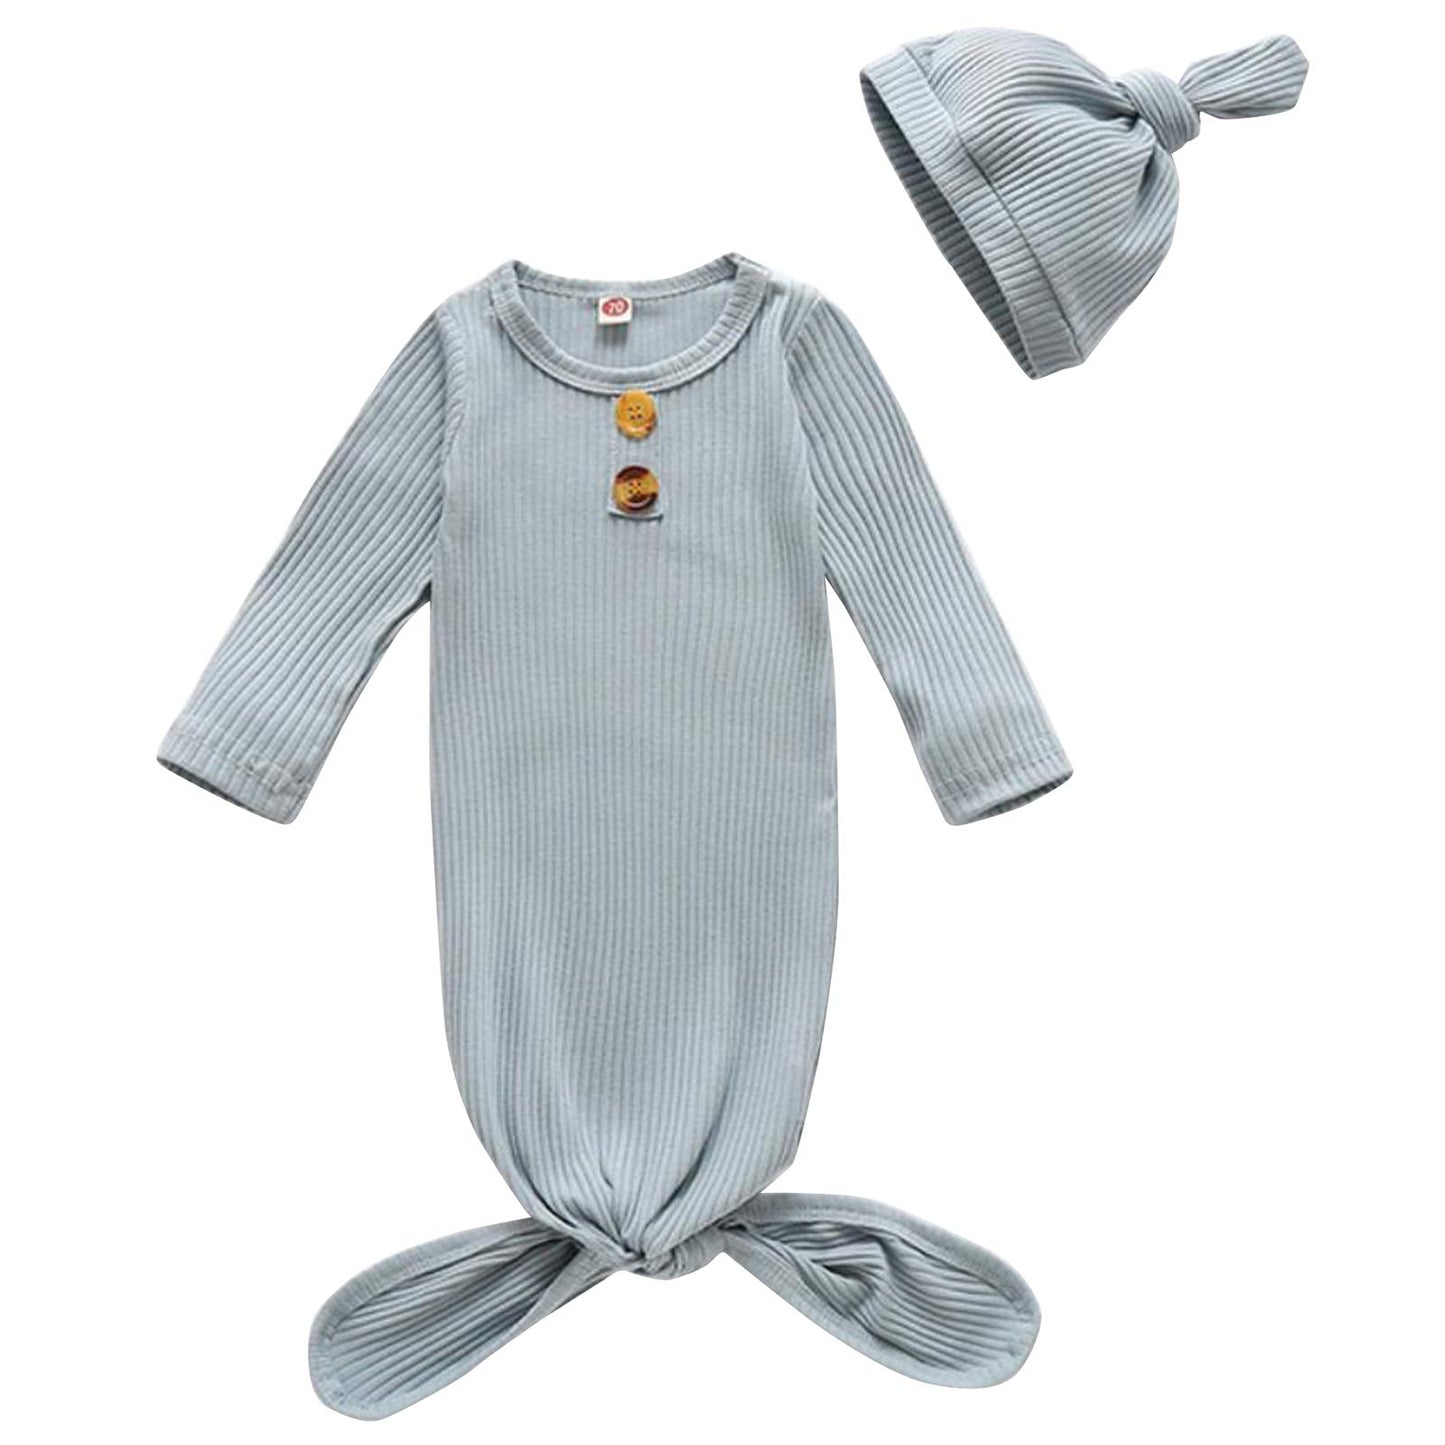 Newborn Baby Nightgown Coming Home Outfits Long Sleeve Sleeping Bags Pajama Set Swaddle Blanket Sleepwear 0-3M